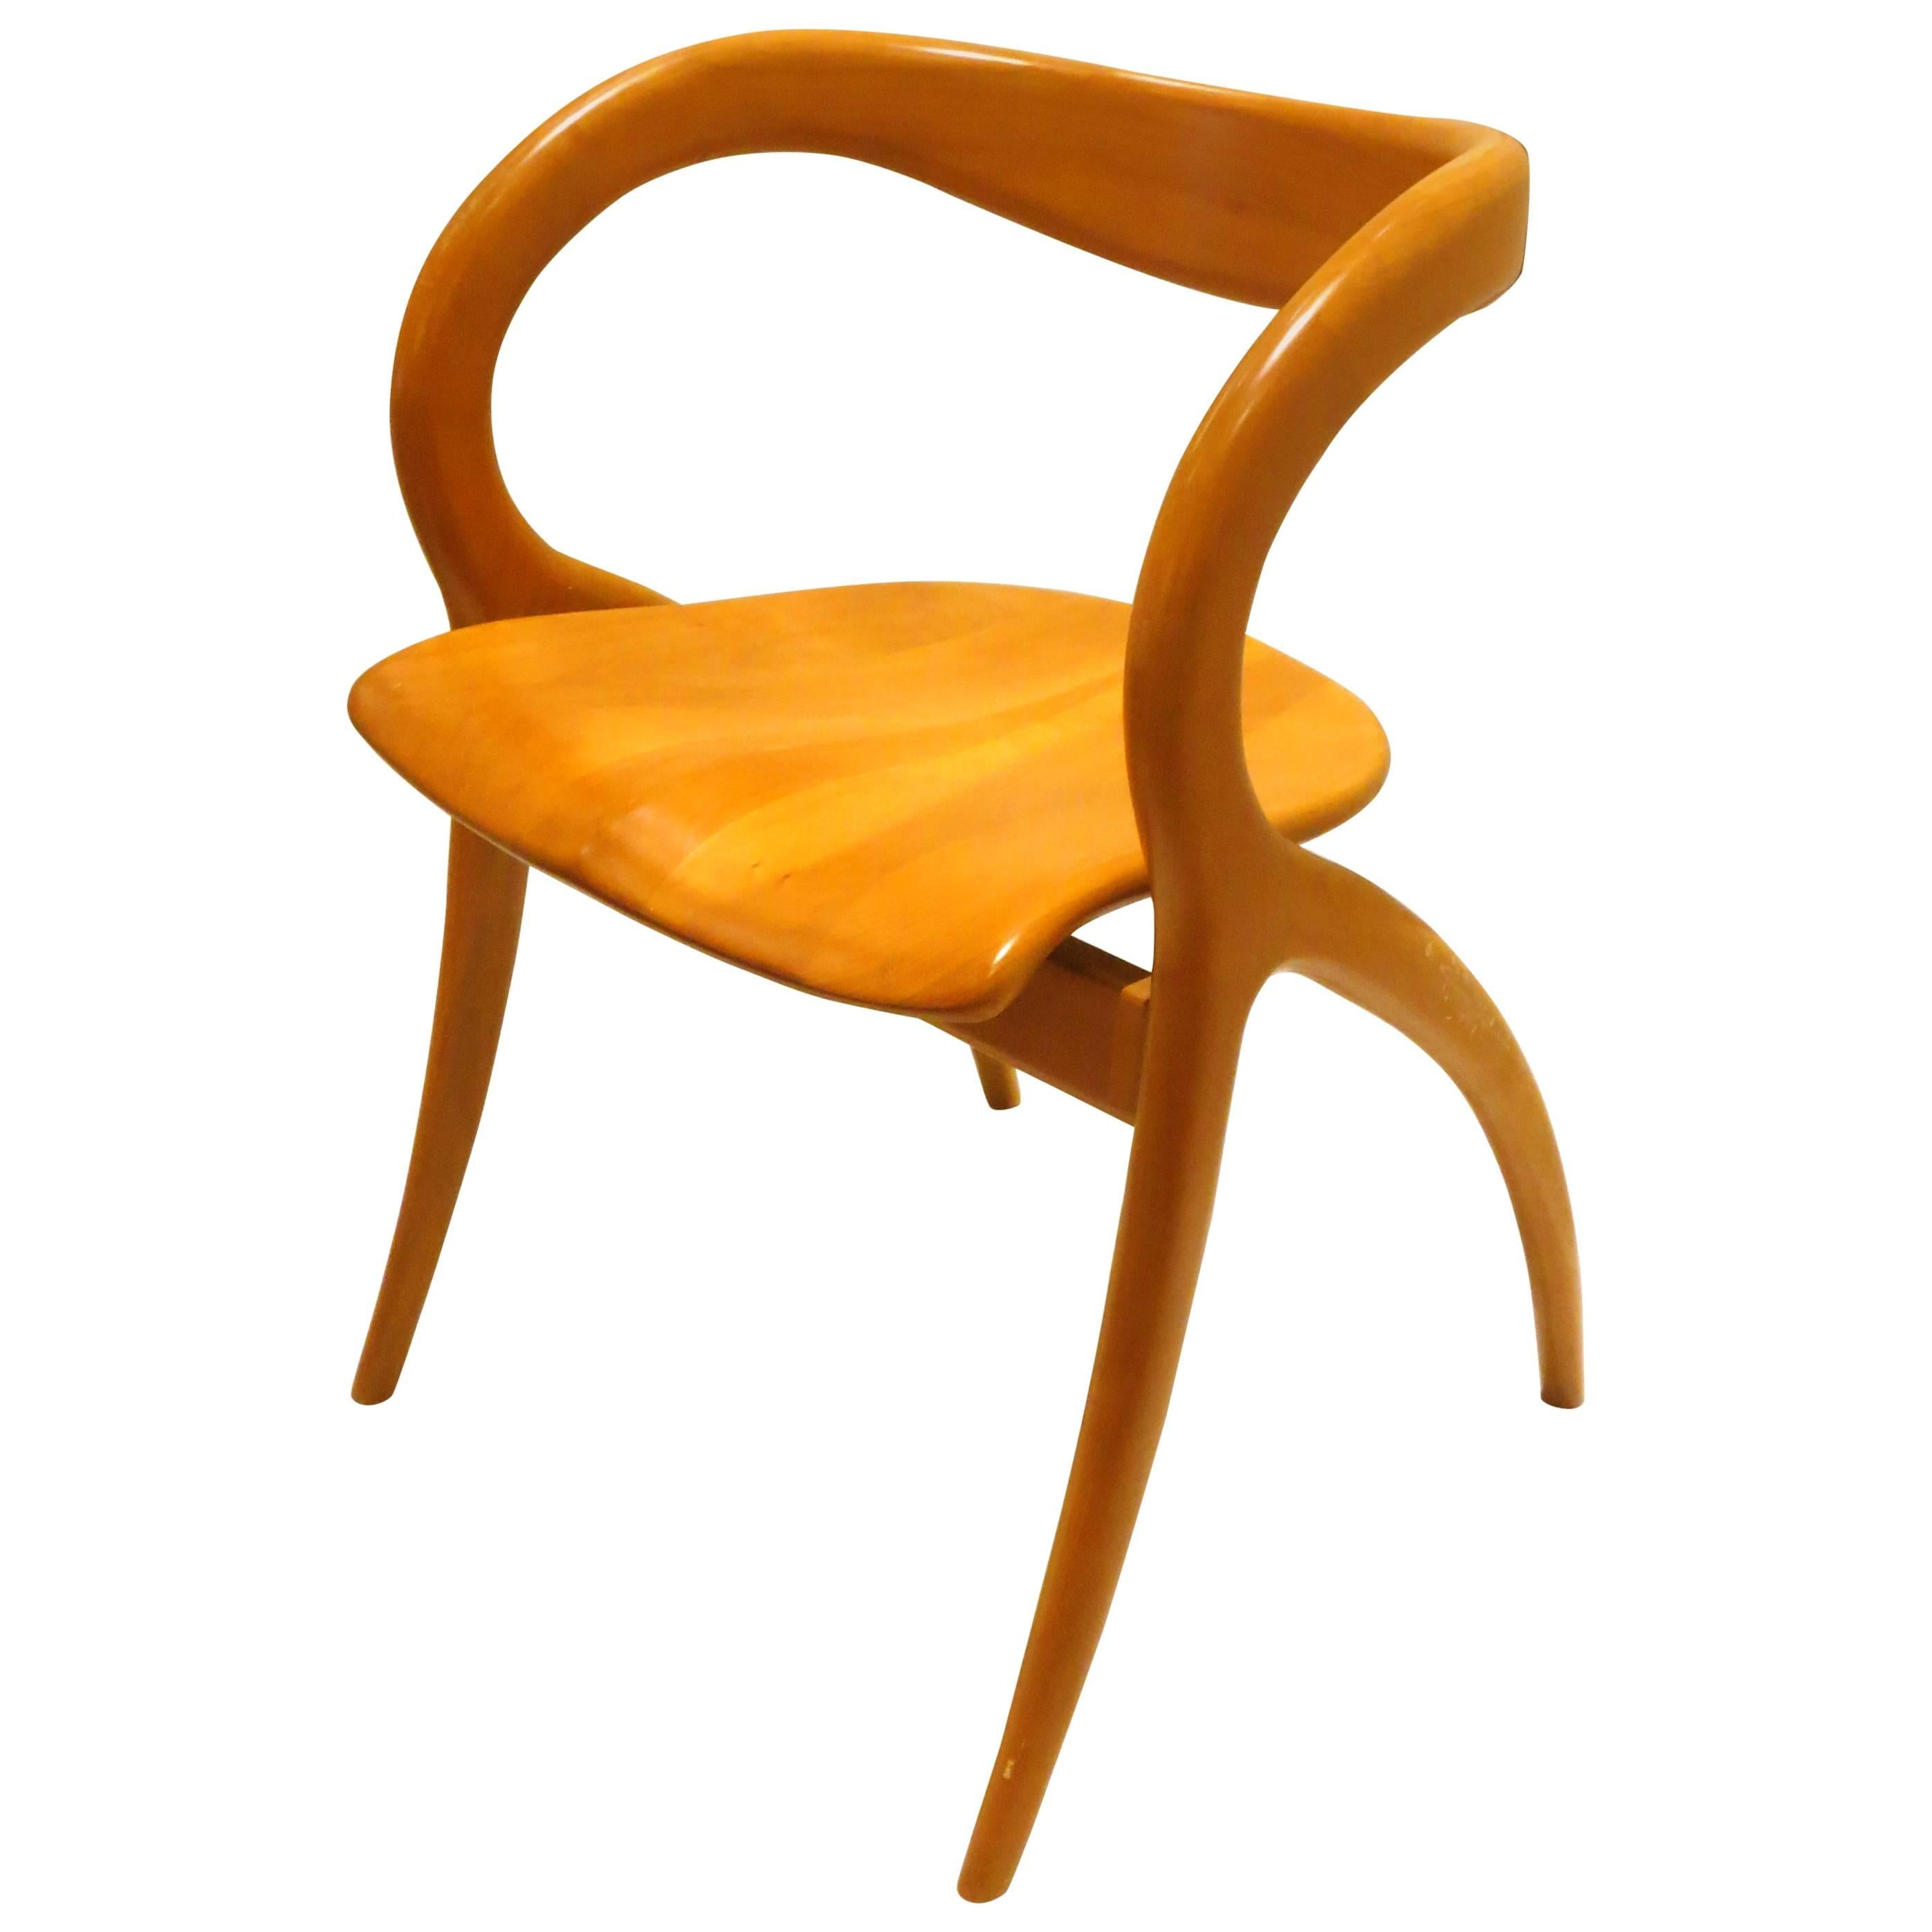 Striking Sculpted Organic Free-Form Cherrywood Italian Chair by a Sibau